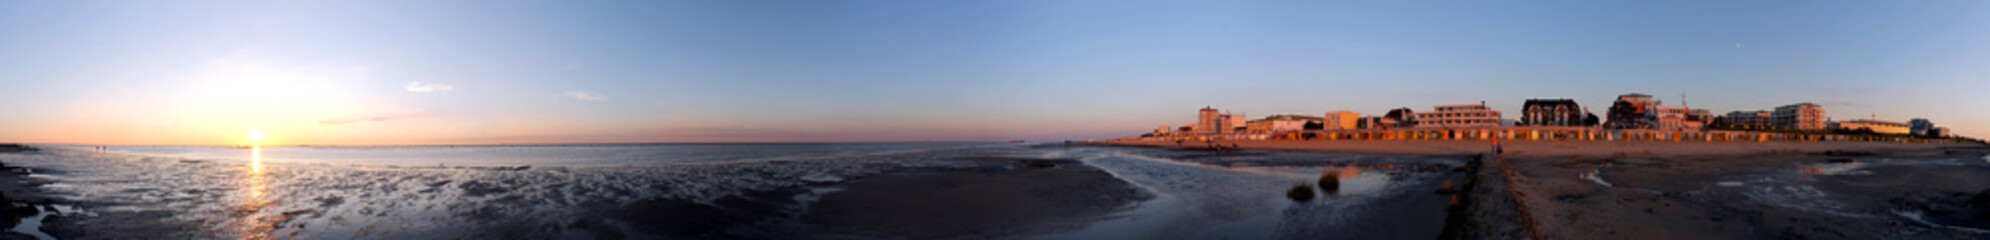 Cuxhaven-Duhnen Strandpanorama